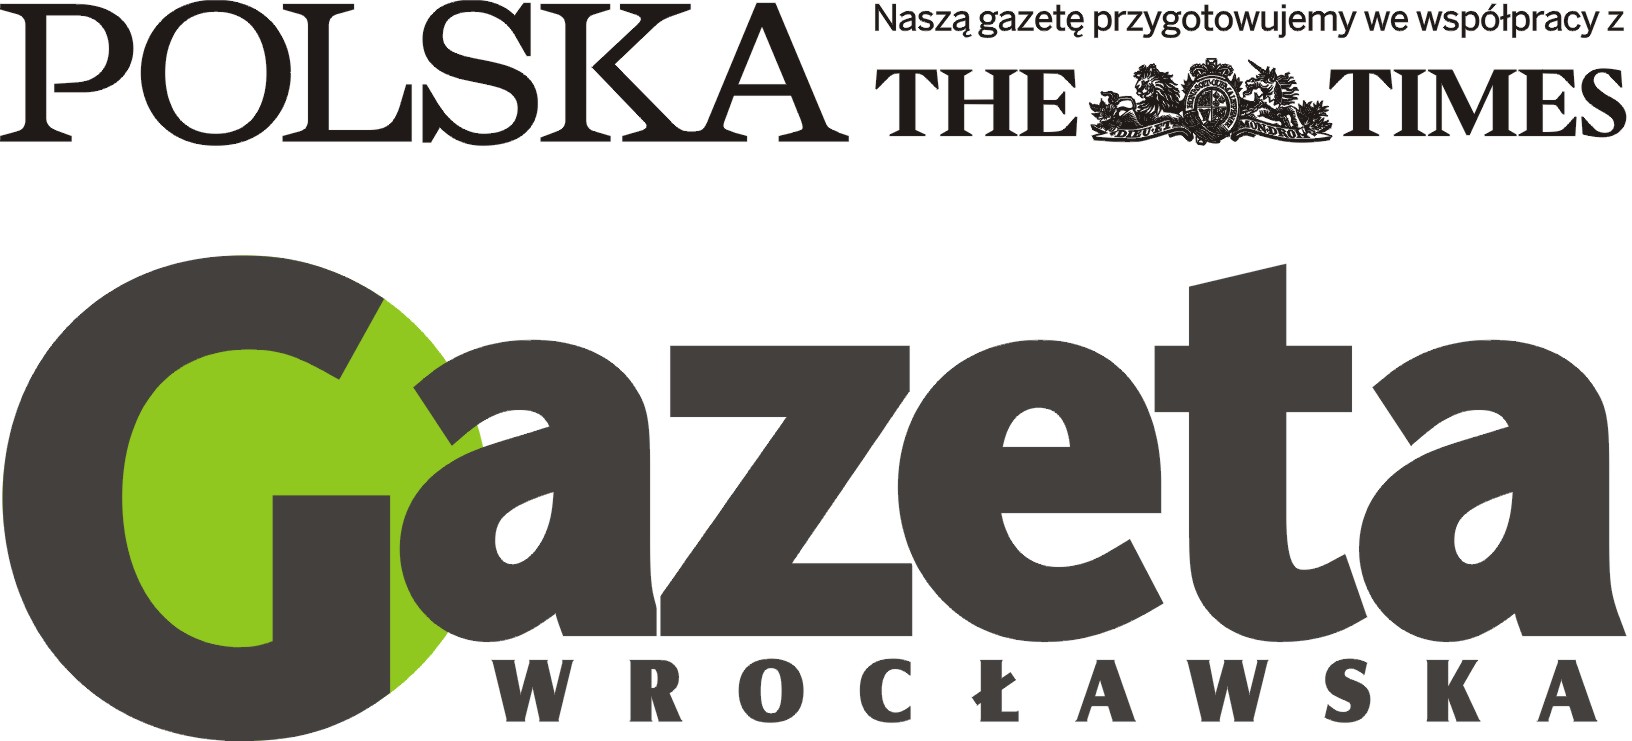 polska_gazeta_wroclawska_logo